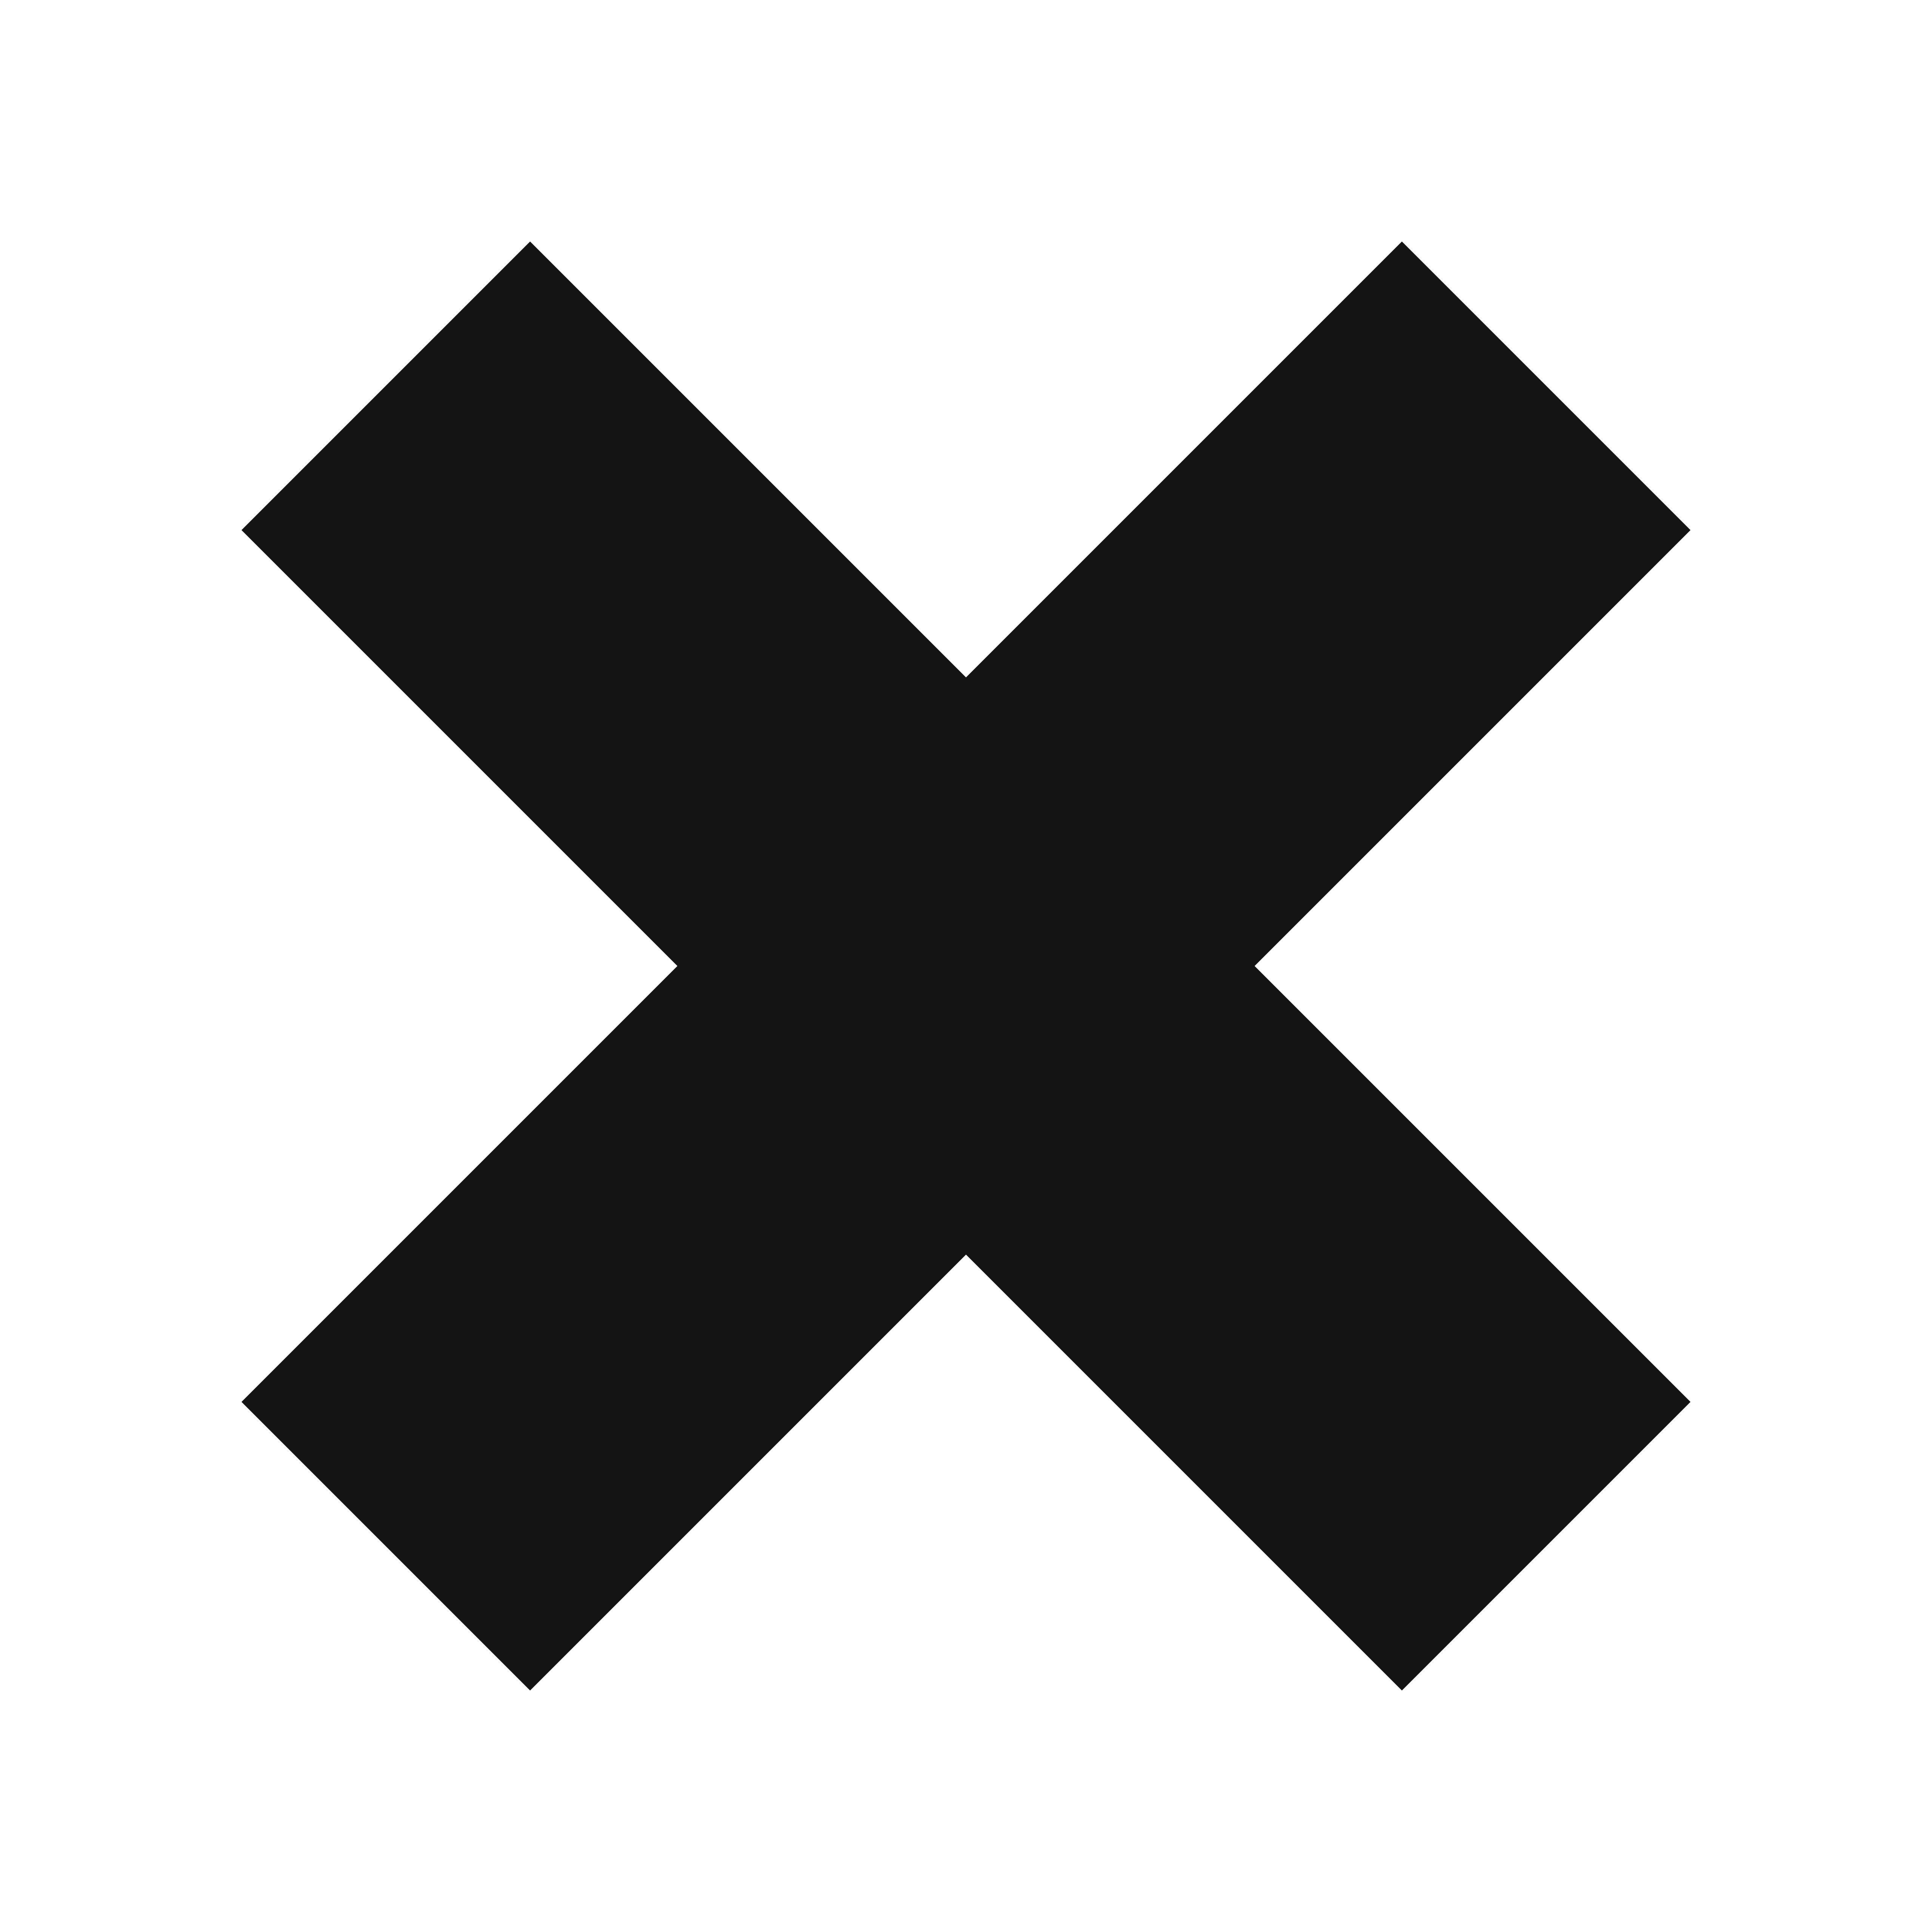 Image x icon. Черный крестик. Крестик закрытия. Белый крестик на черном фоне. Крестик картинка.